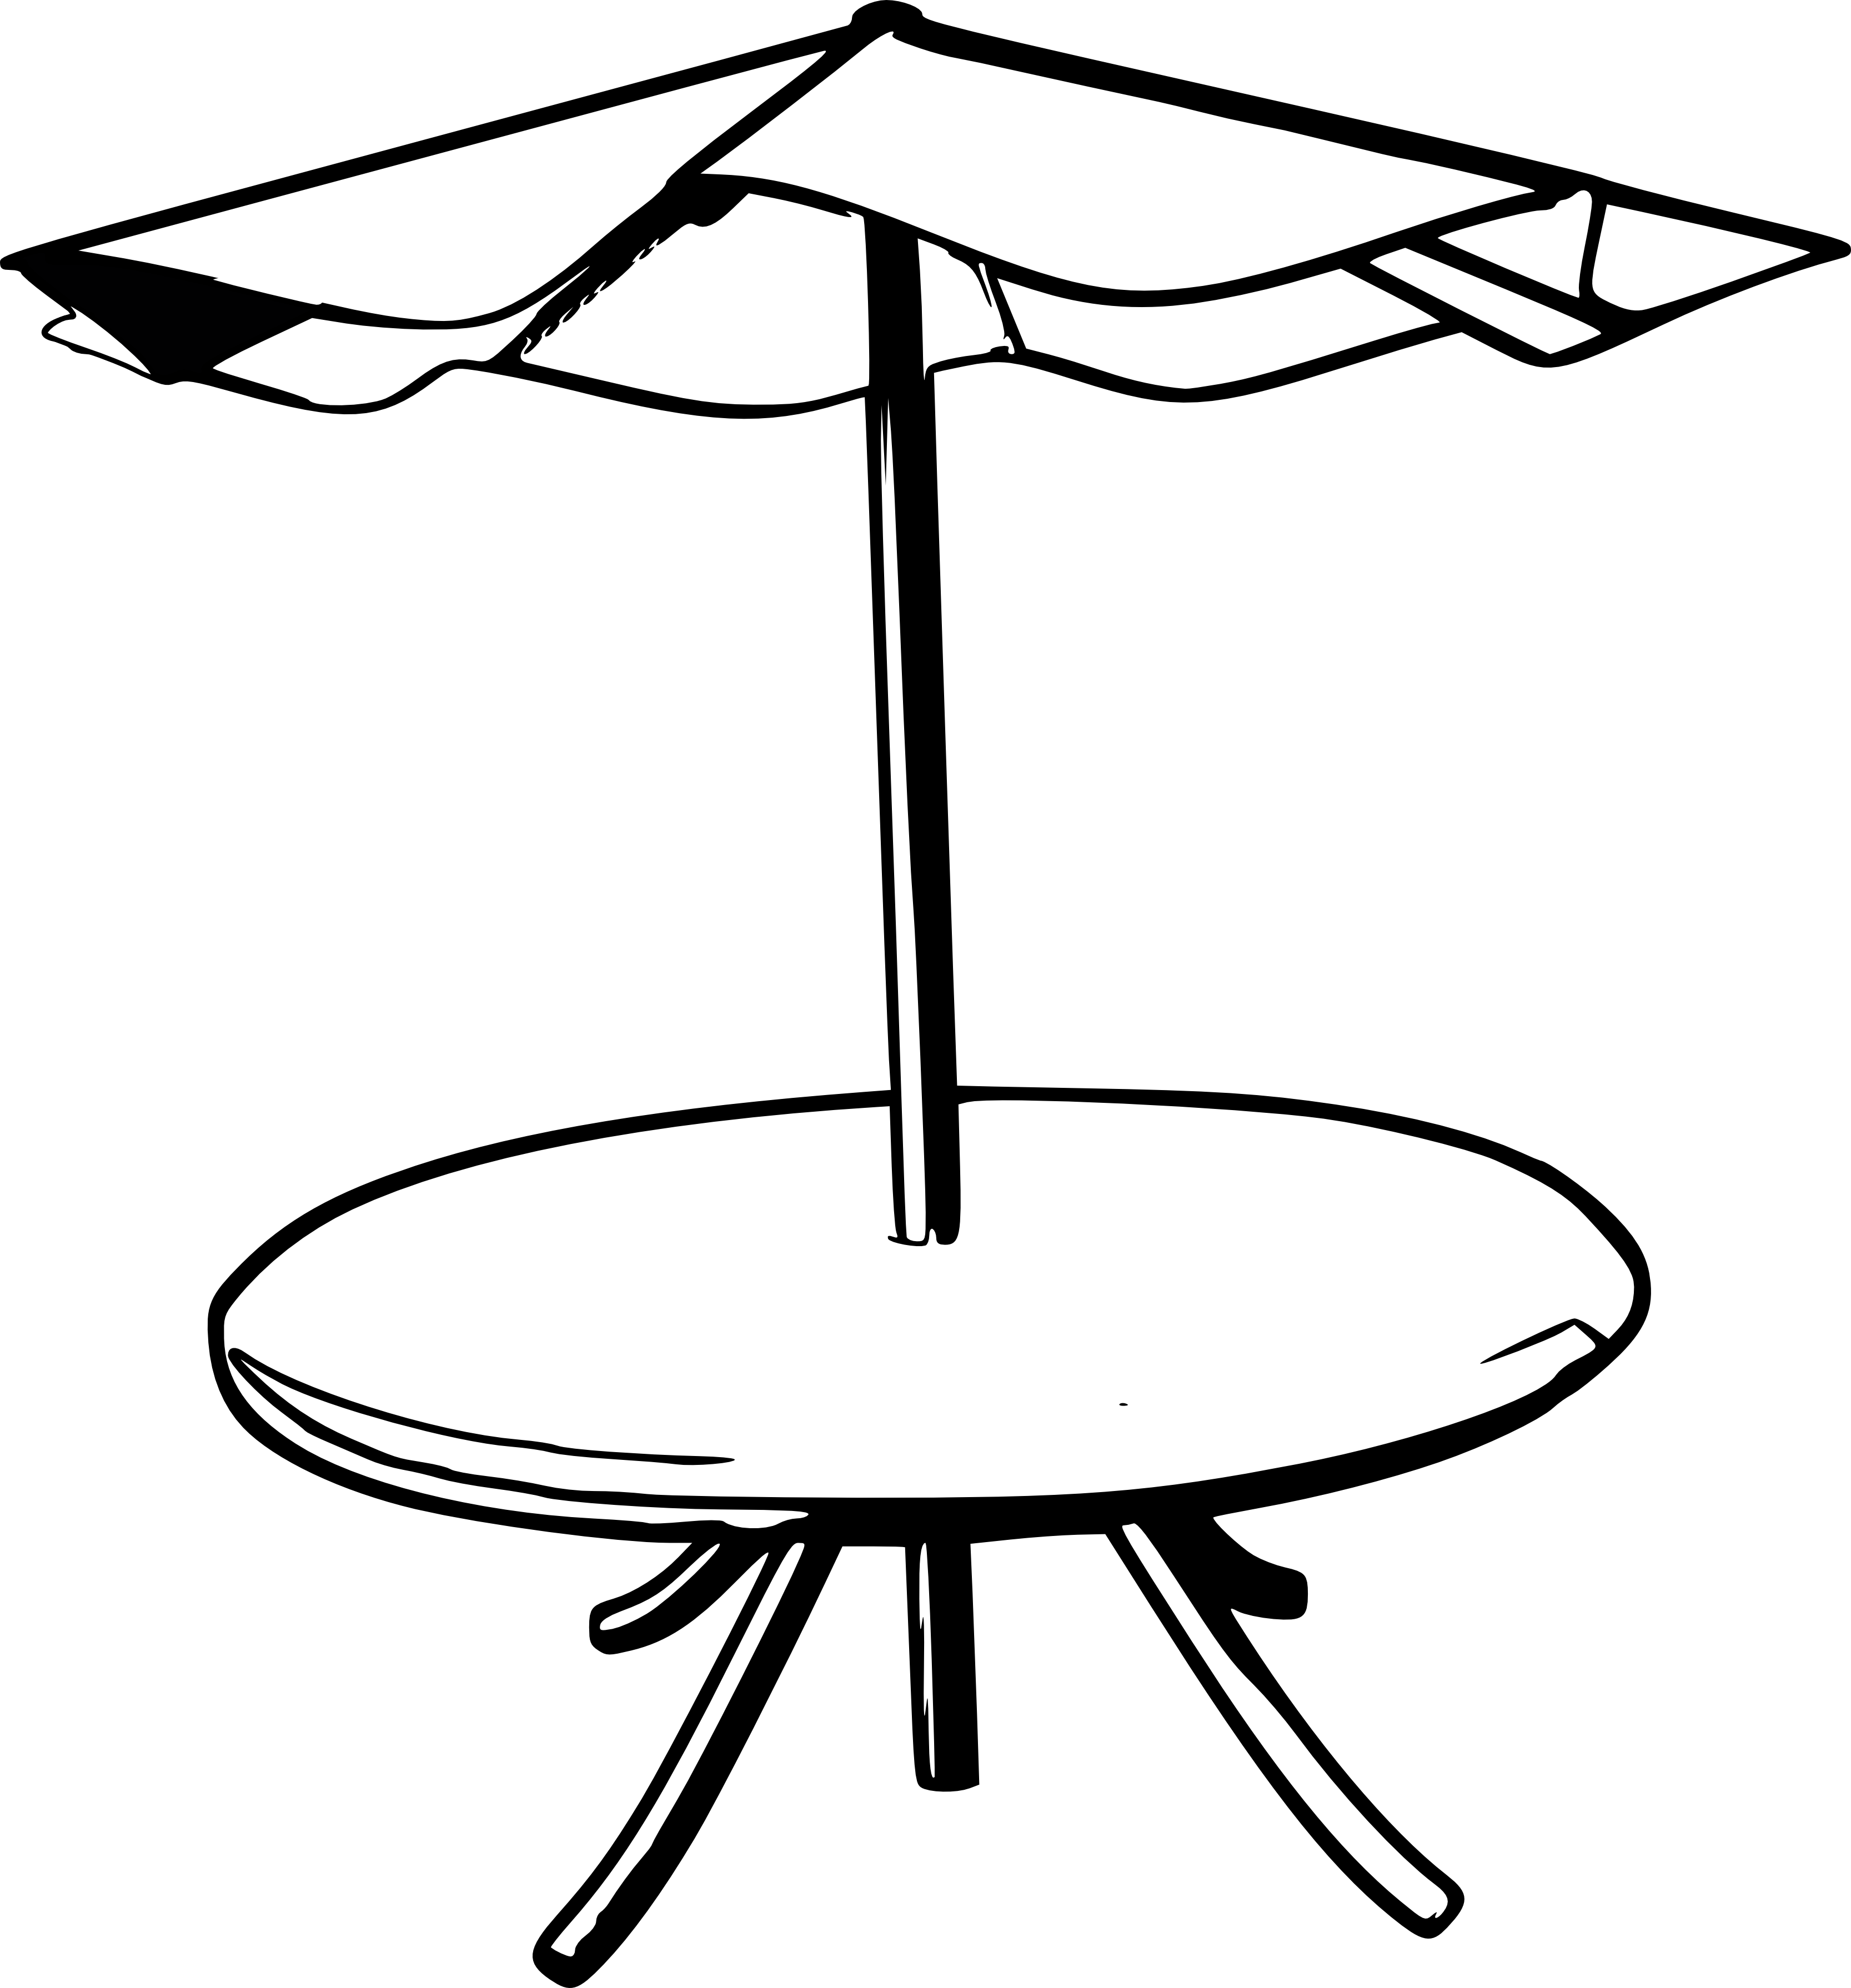 Umbrella . Outline clipart table